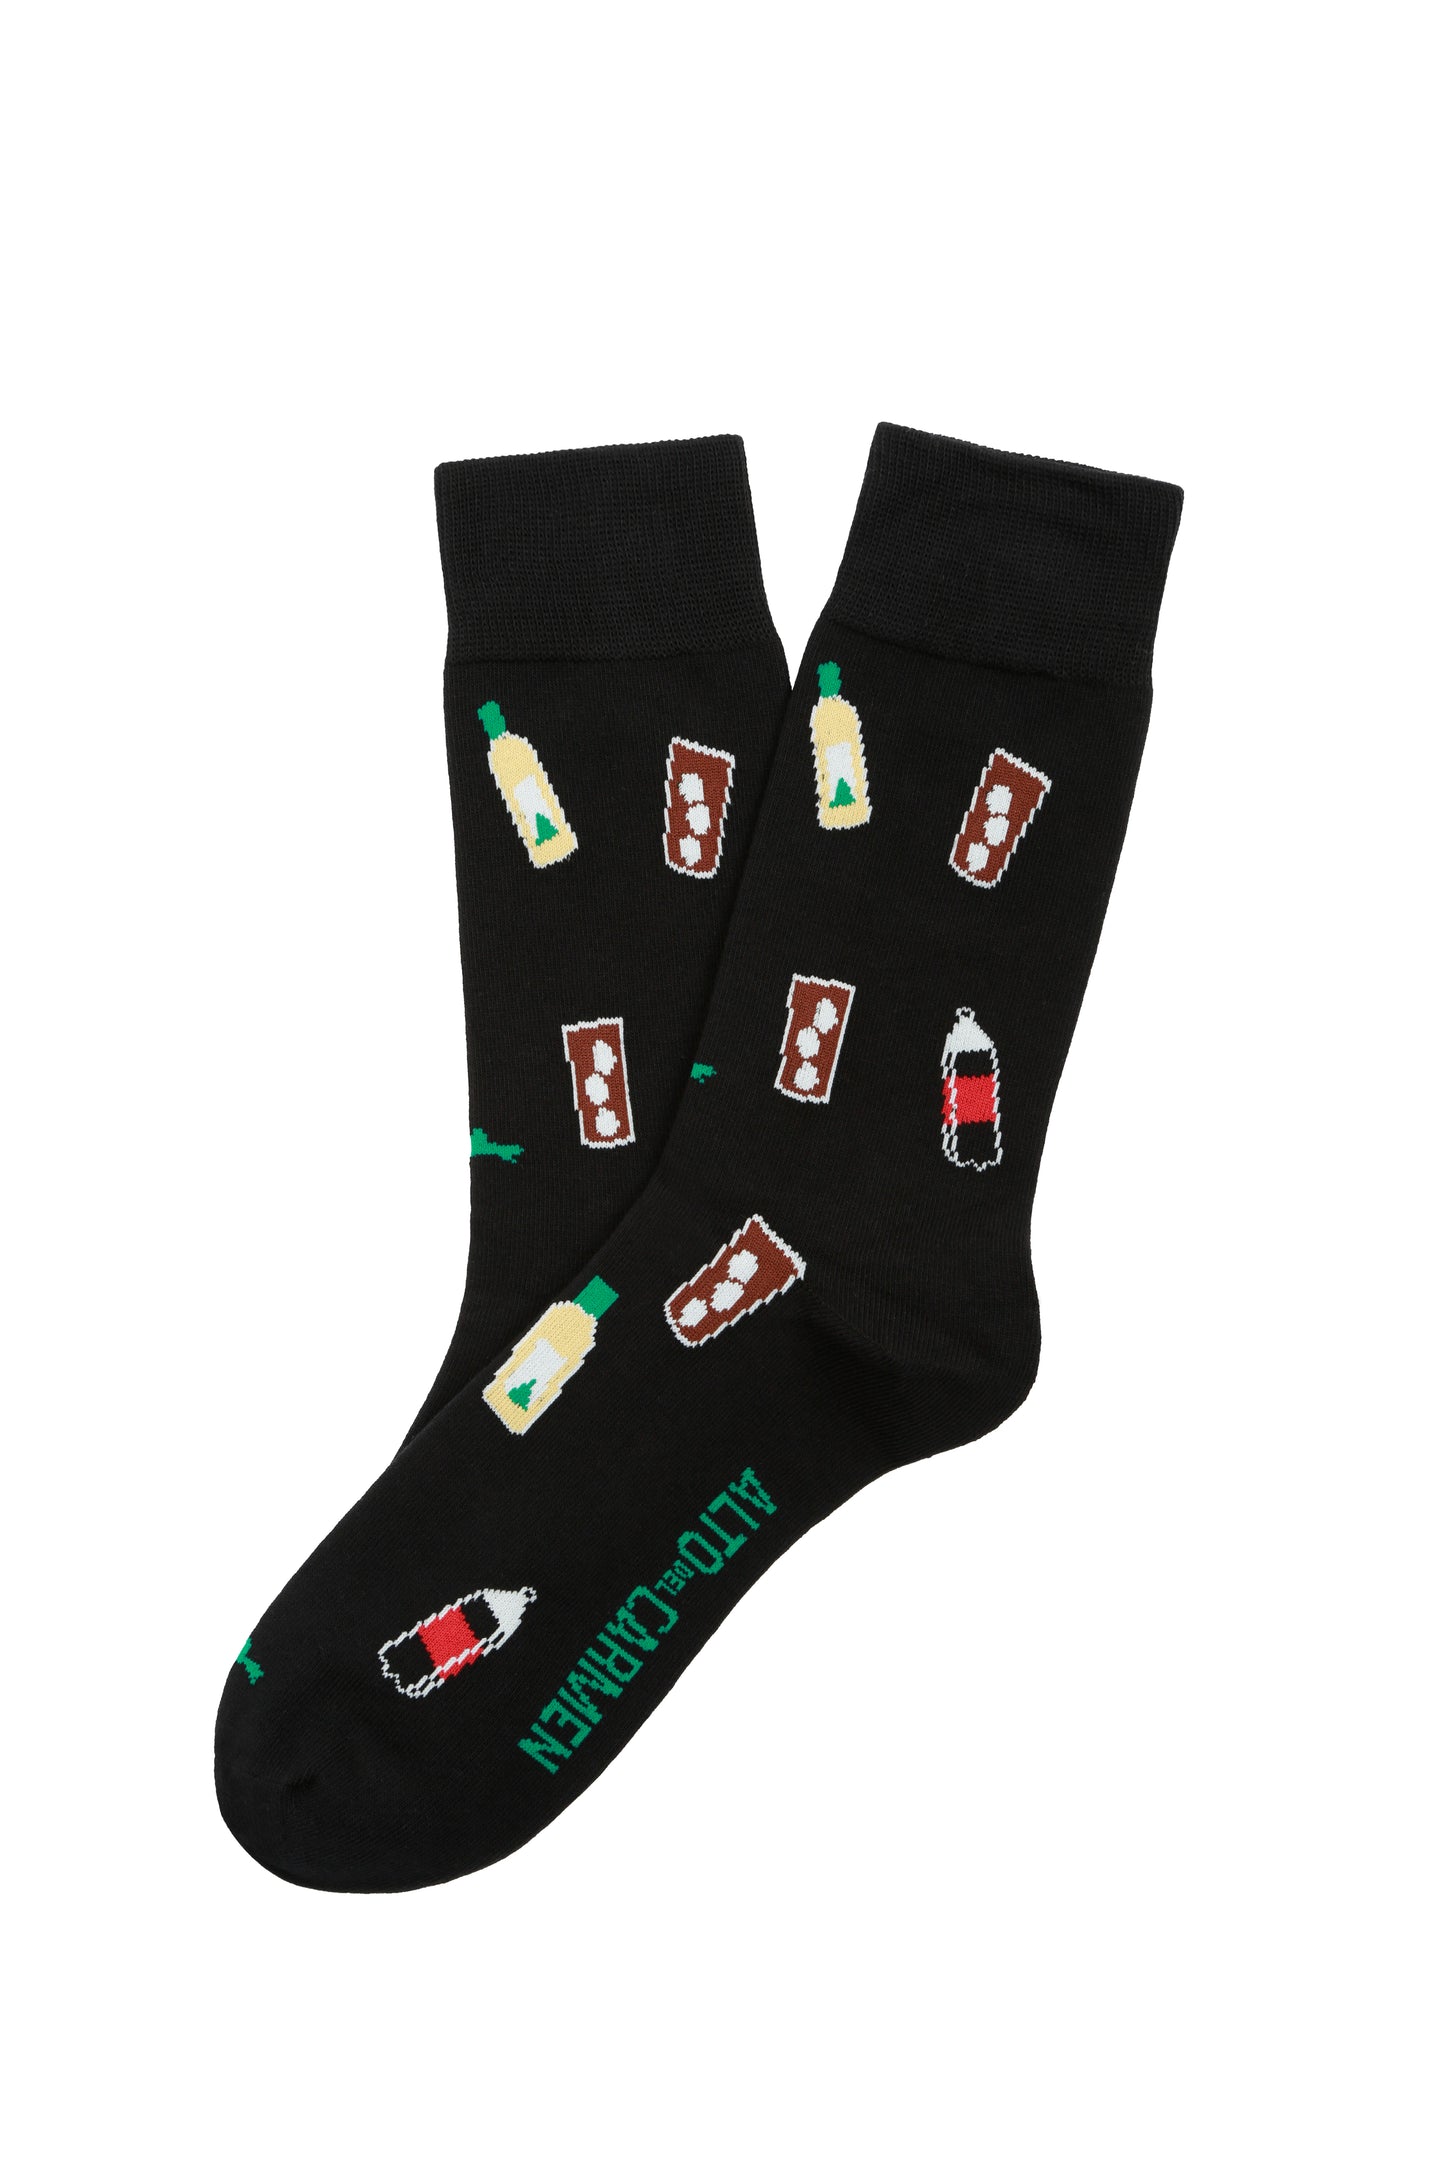 Calcetines con diseño Socks Lab - Pack x2 Carrete